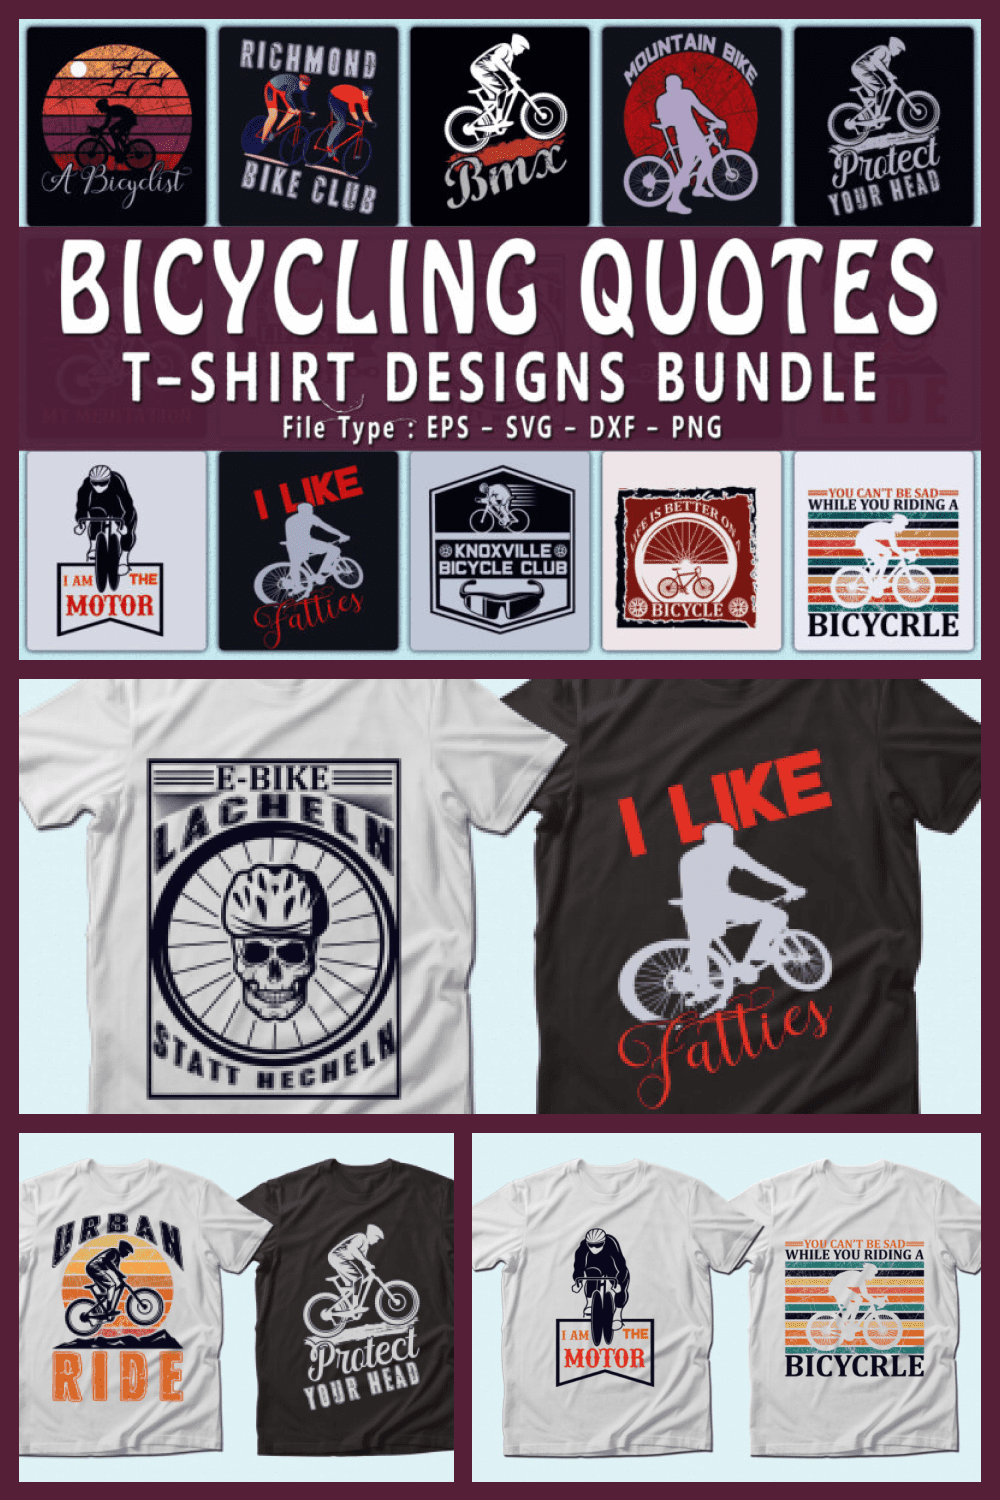 Trendy 20 Bicycle Quotes T-shirt Designs Bundle - MasterBundles - Pinterest Collage Image.